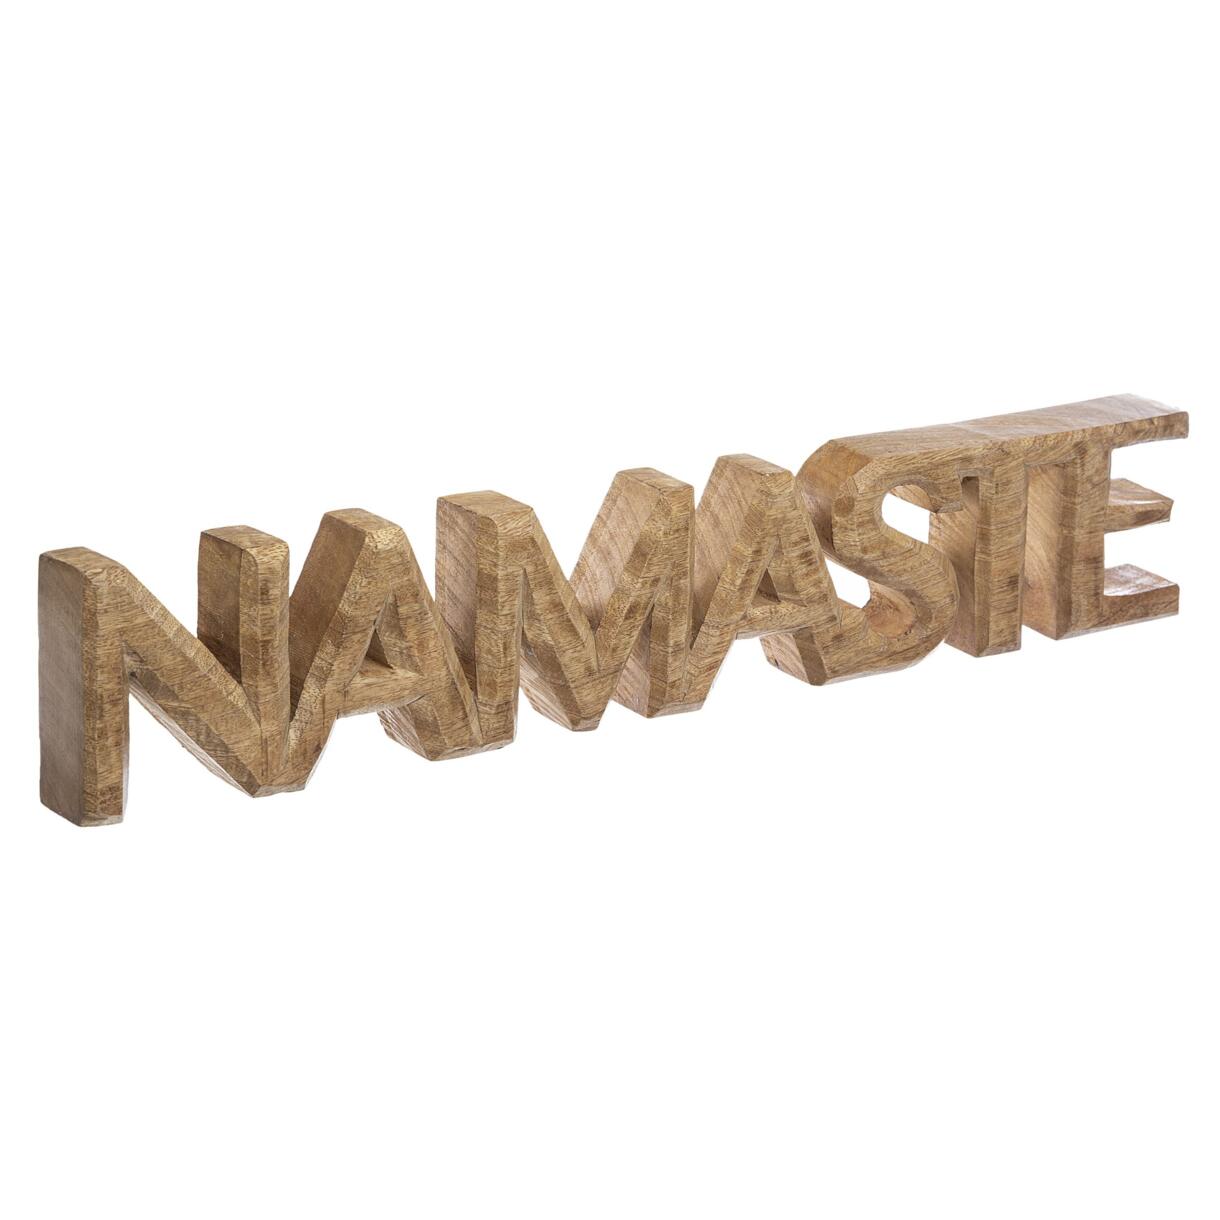 Letras decorativas en madera NAMASTE Natural 1